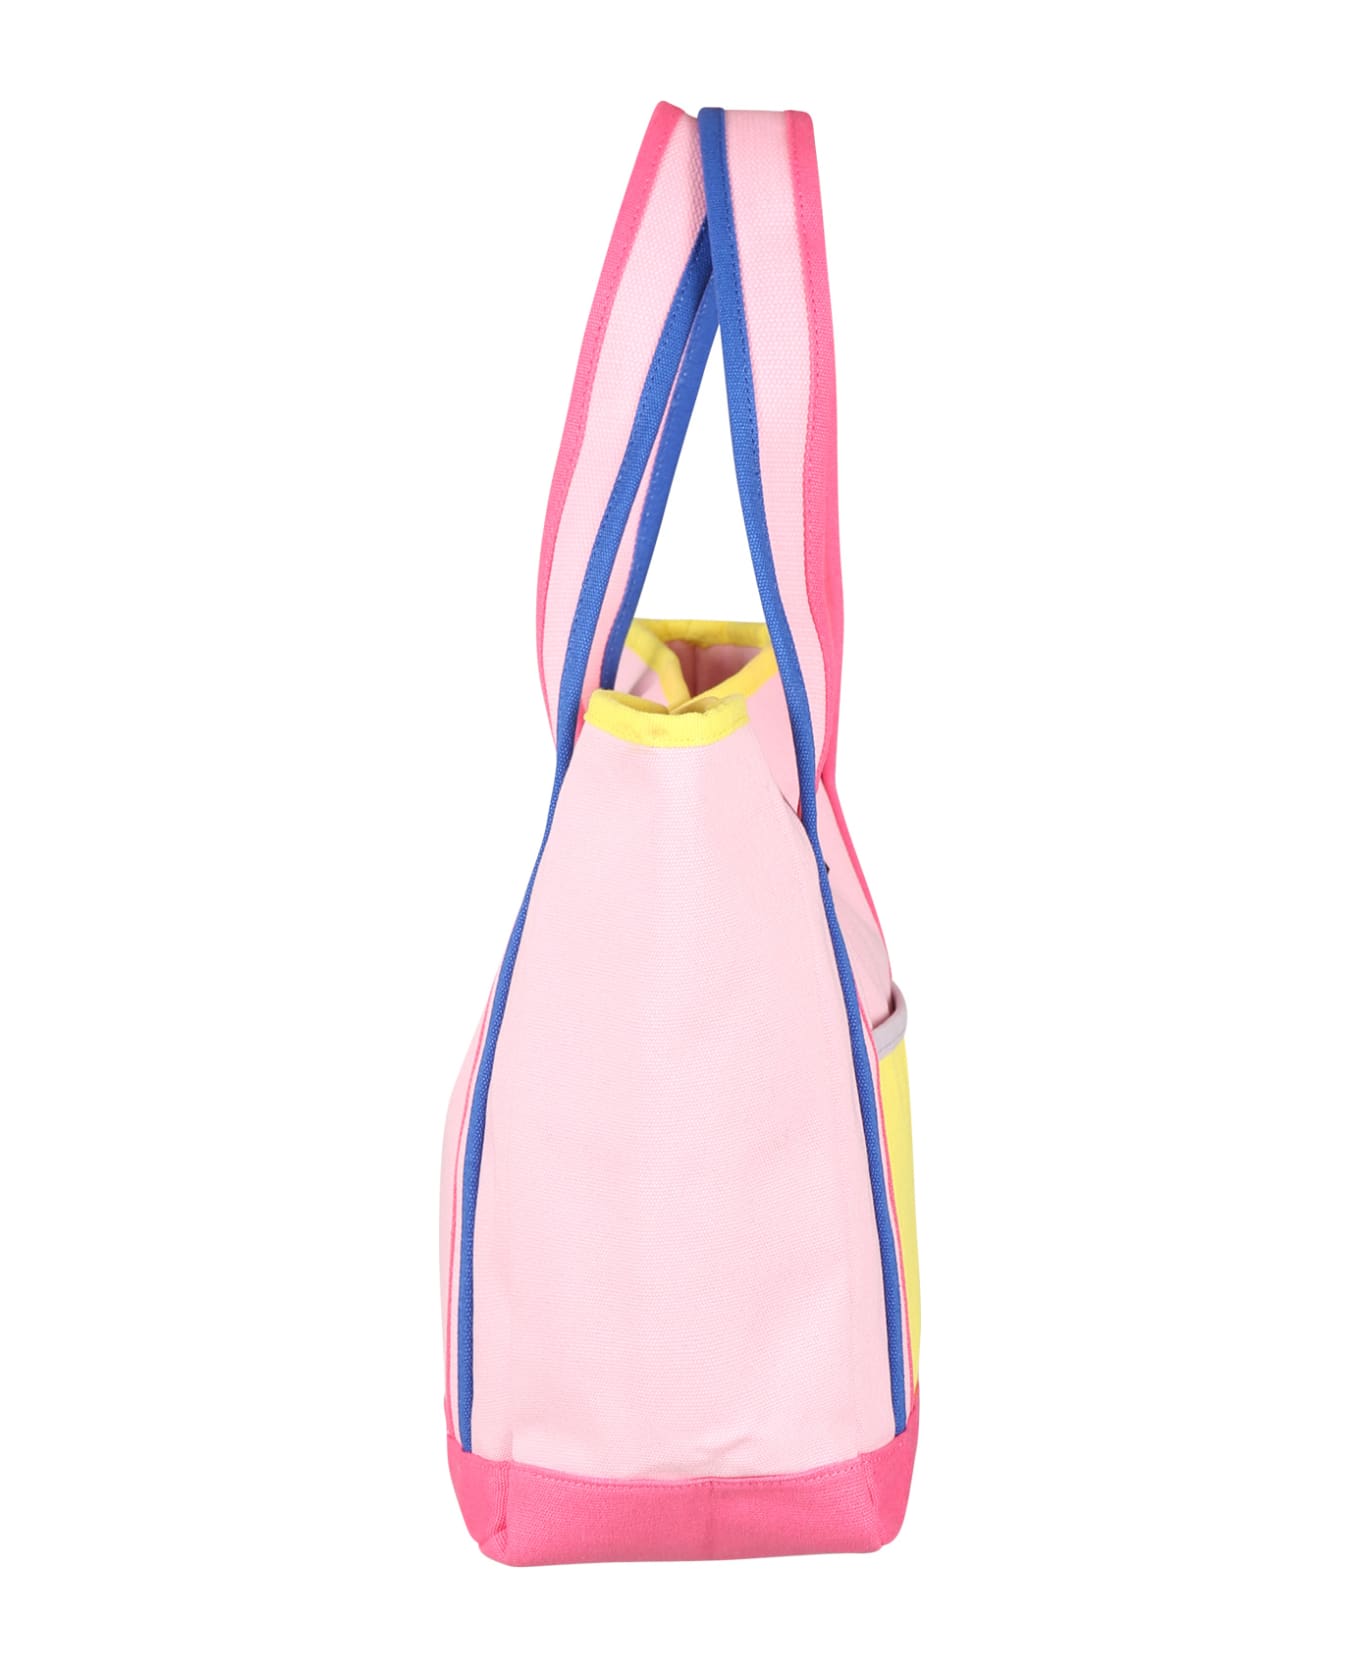 Rykiel Enfant Pink Bag For Girl With Love Rykiel Writing - Pink